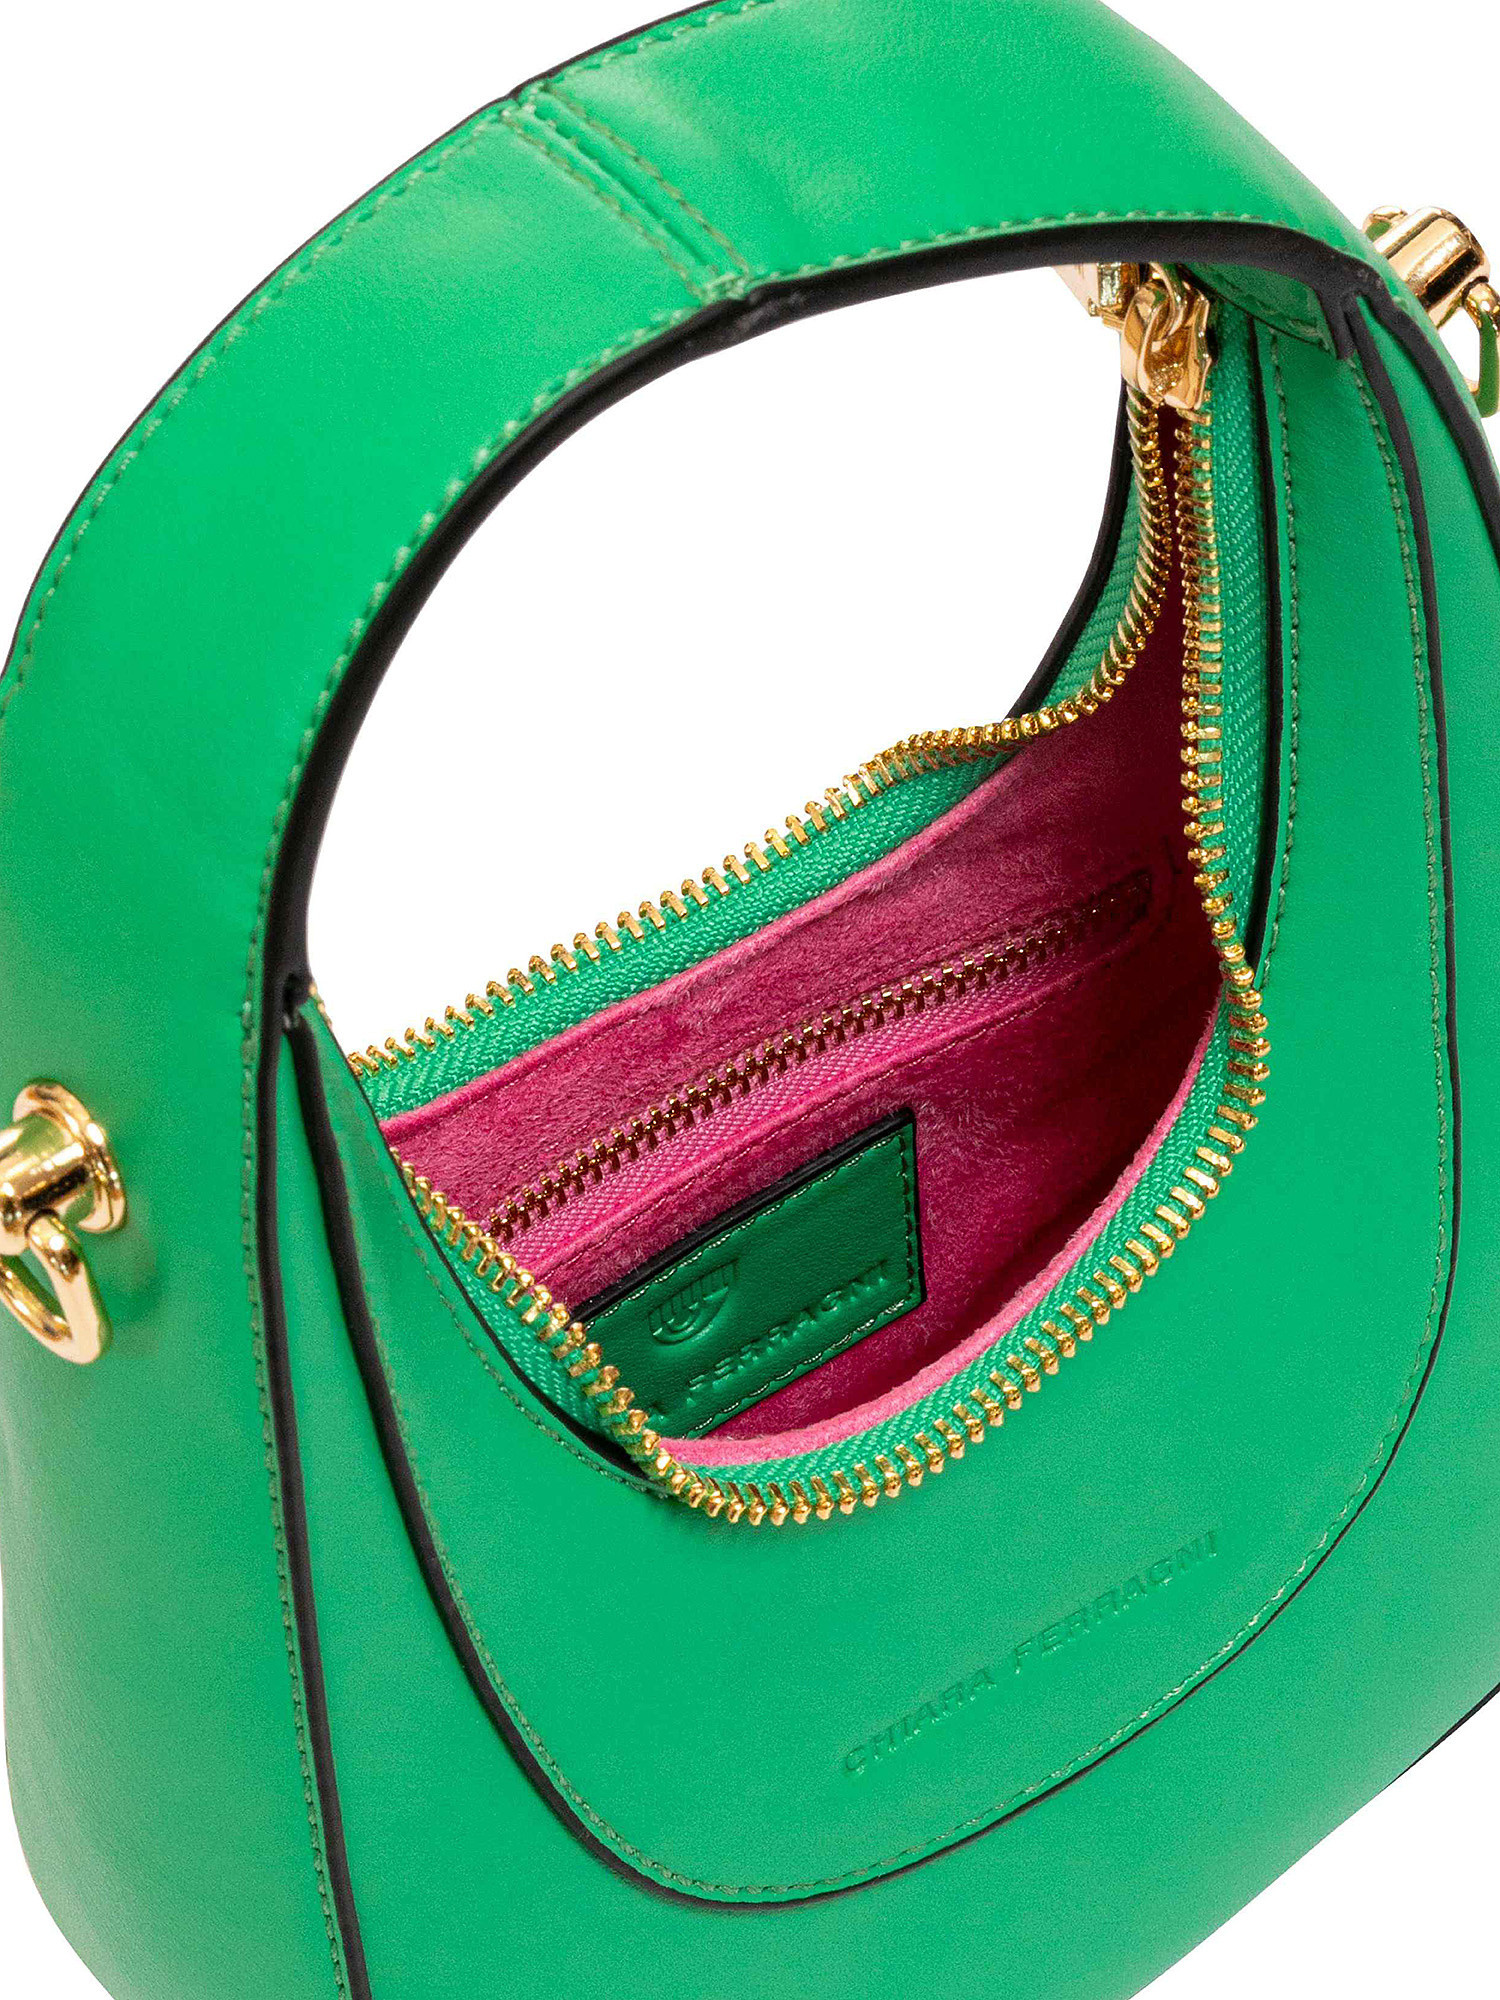 Chiara Ferragni - Range G golden eye star bag, Green, large image number 2